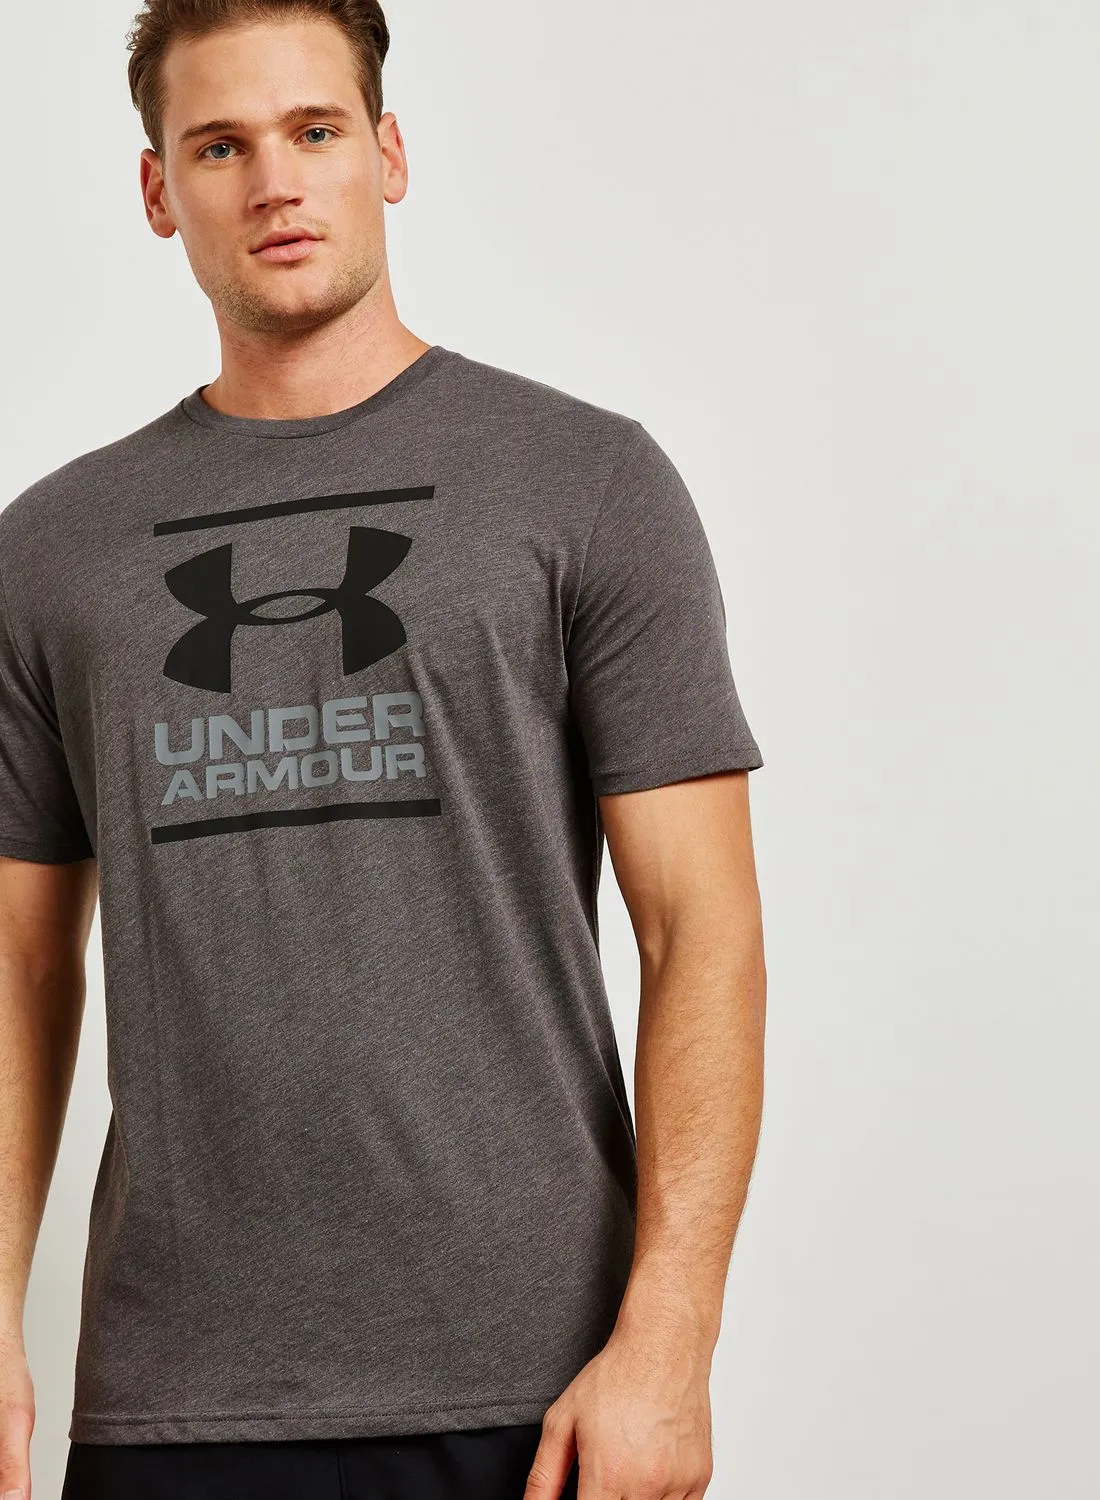 UNDER ARMOUR Foundation T-Shirt